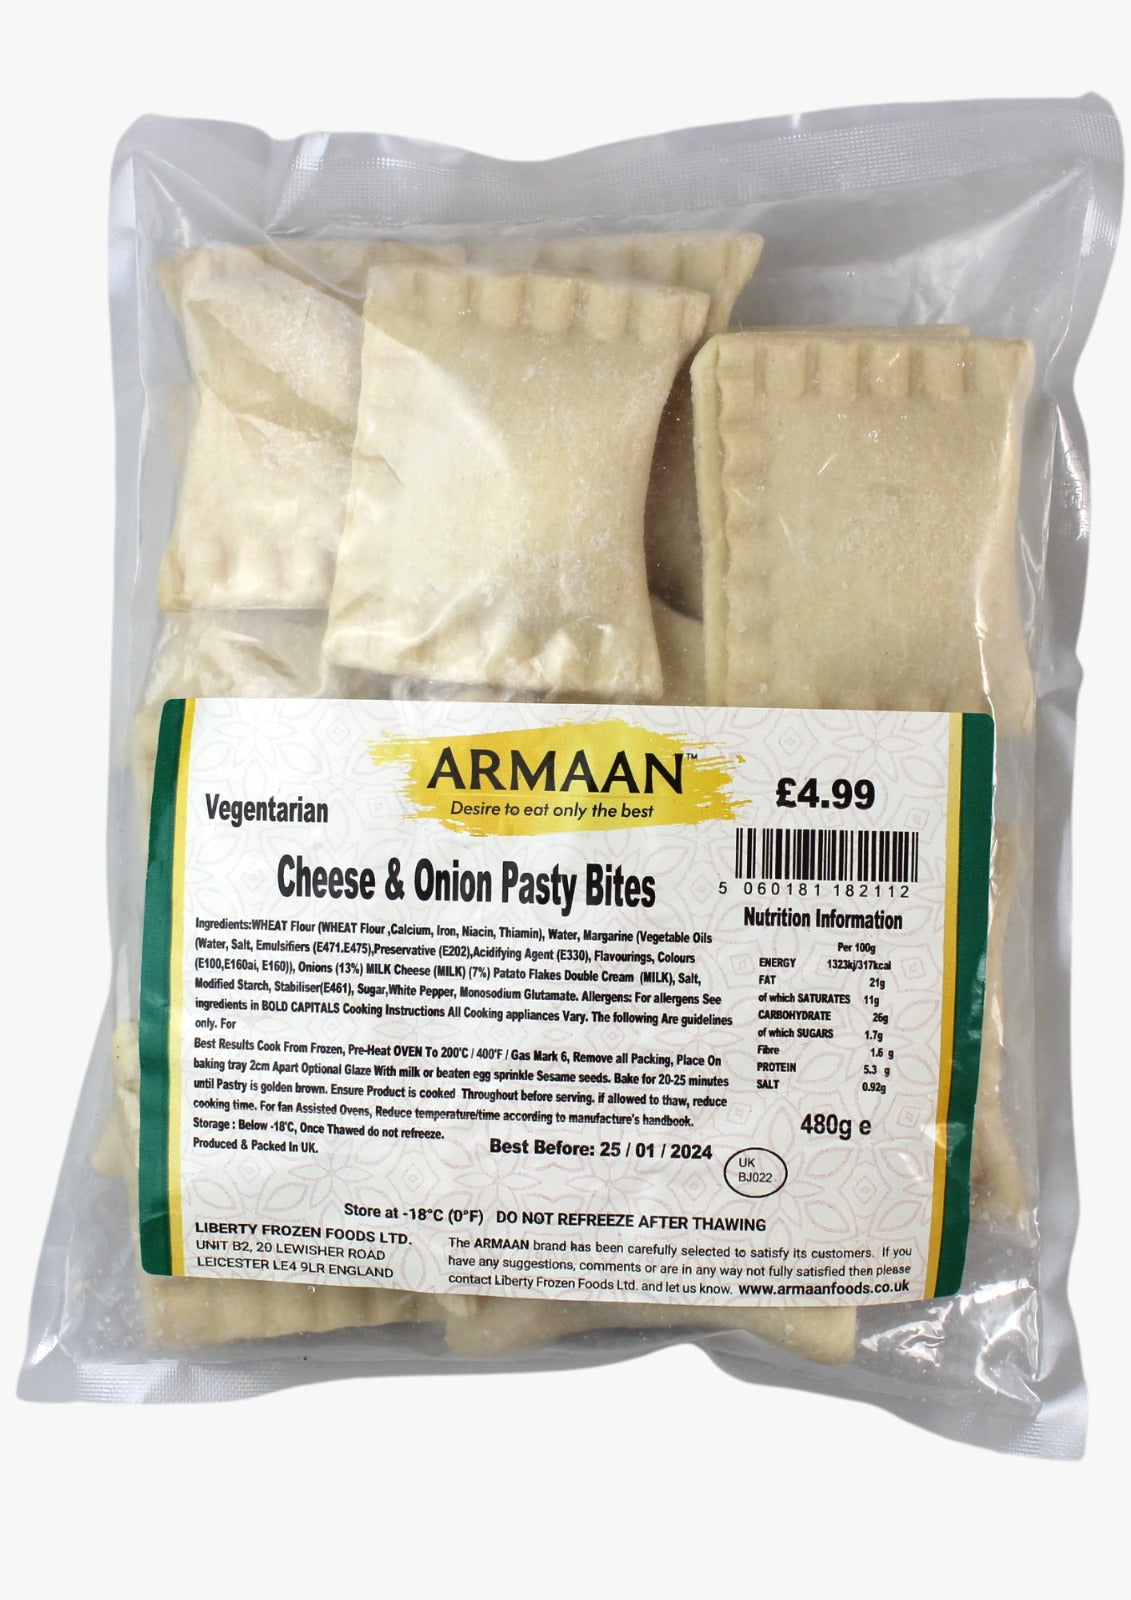 Armaan - Cheese & Onion Pasty Bites (480g)